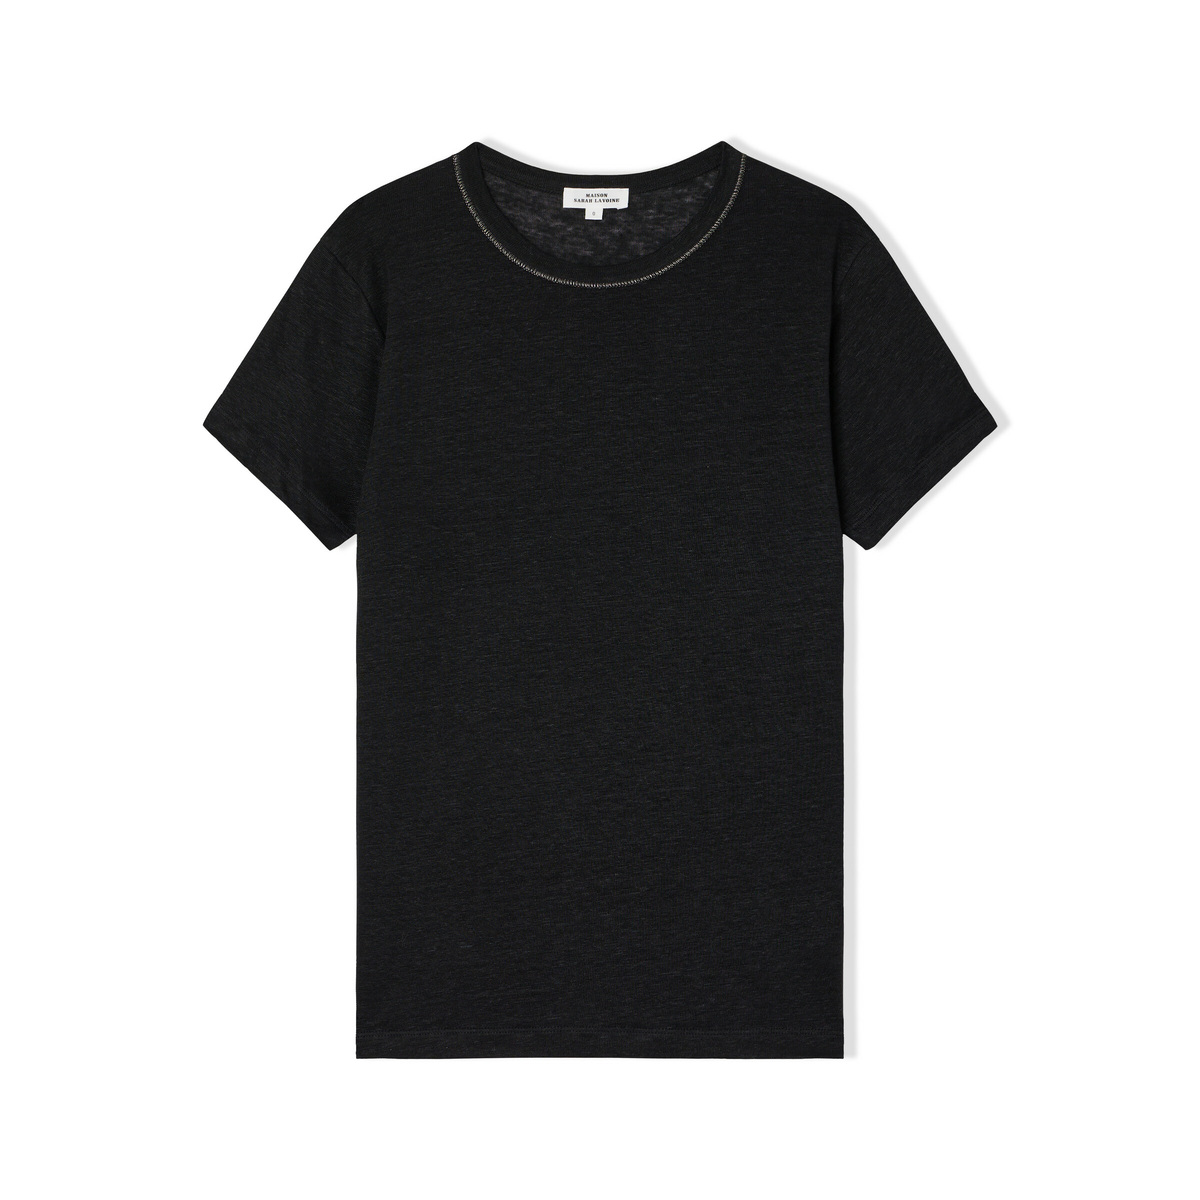 Lina Tee Shirt, Black - Round Neck - 100% Linen - image 1